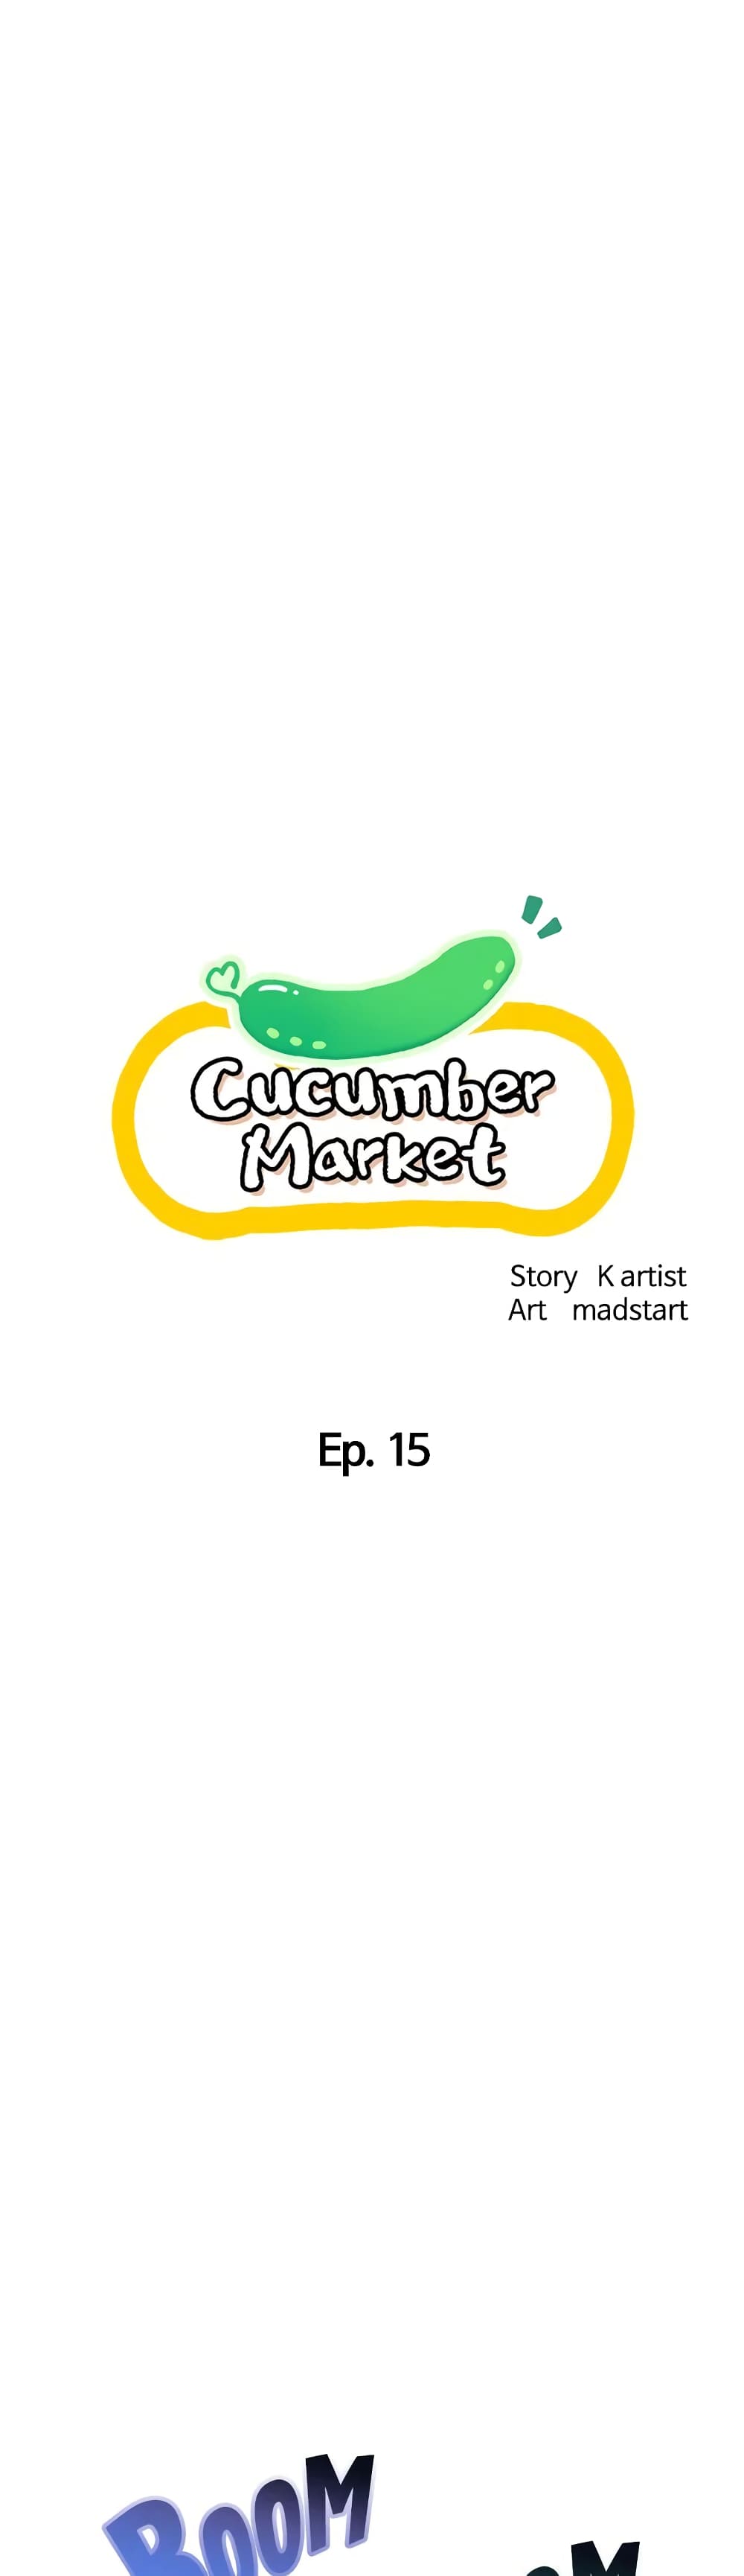 Cucumber Market 15 (1)